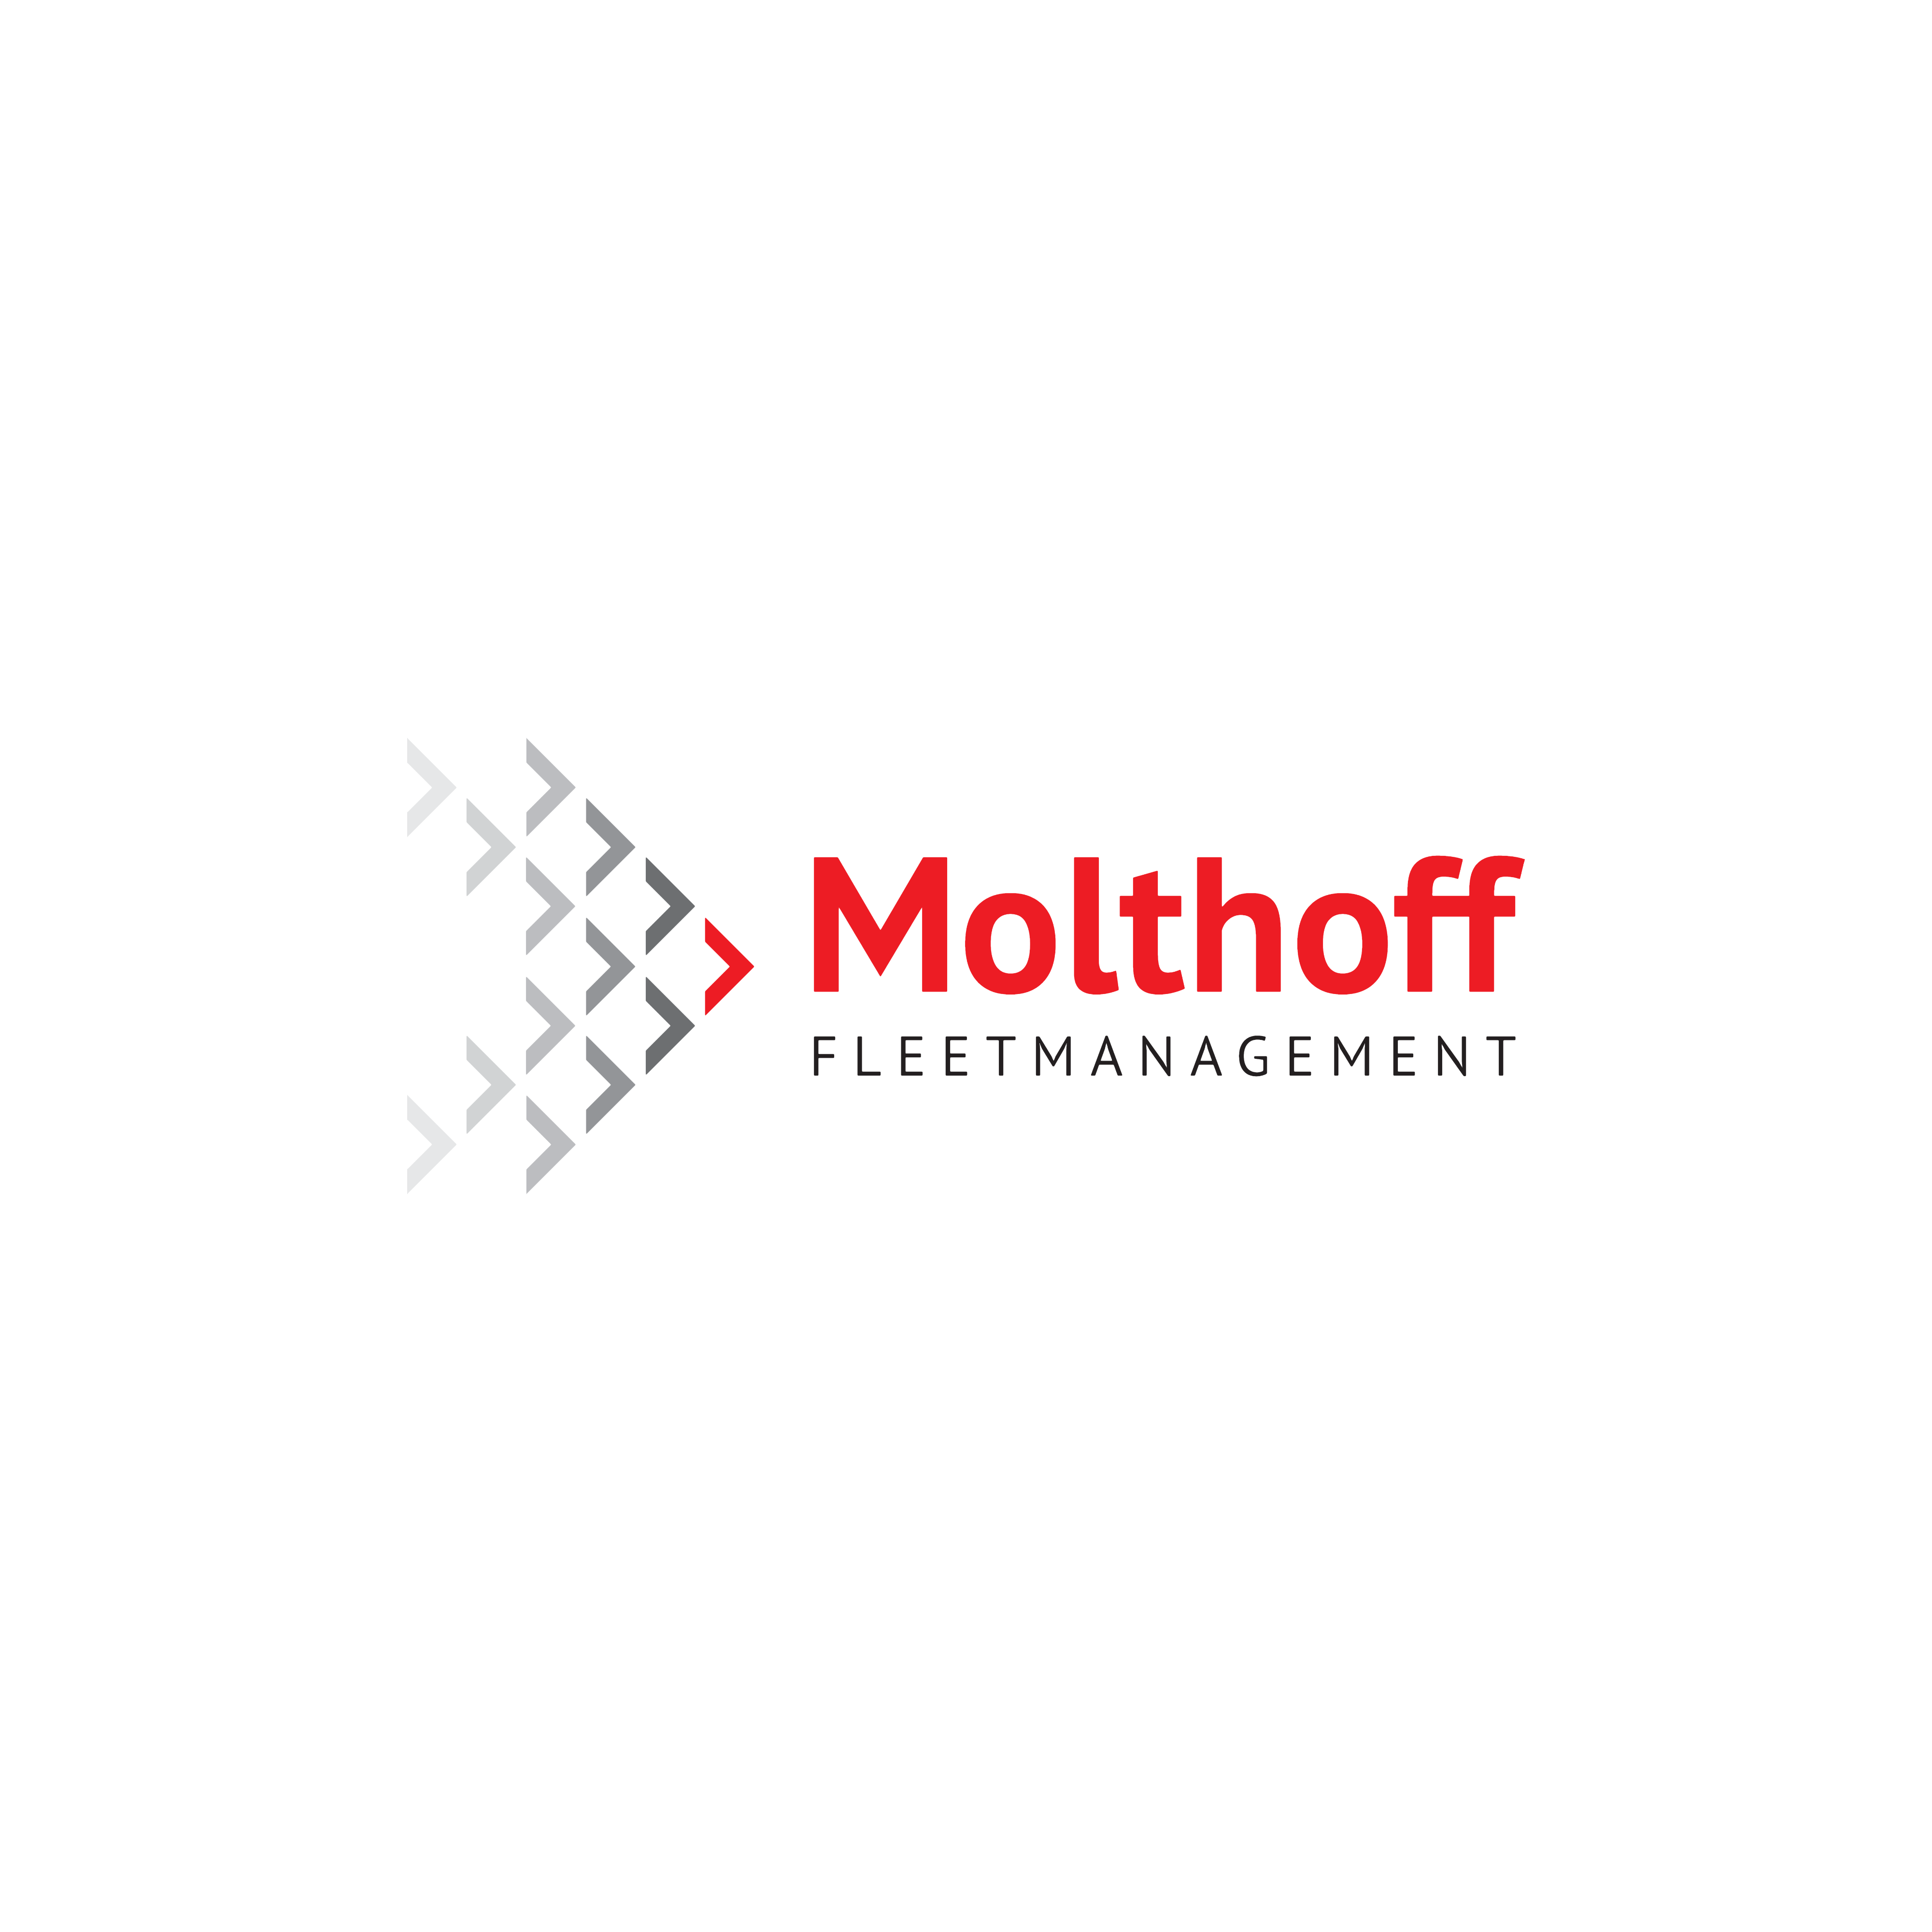 (c) Molthoff-fleetmanagement.nl